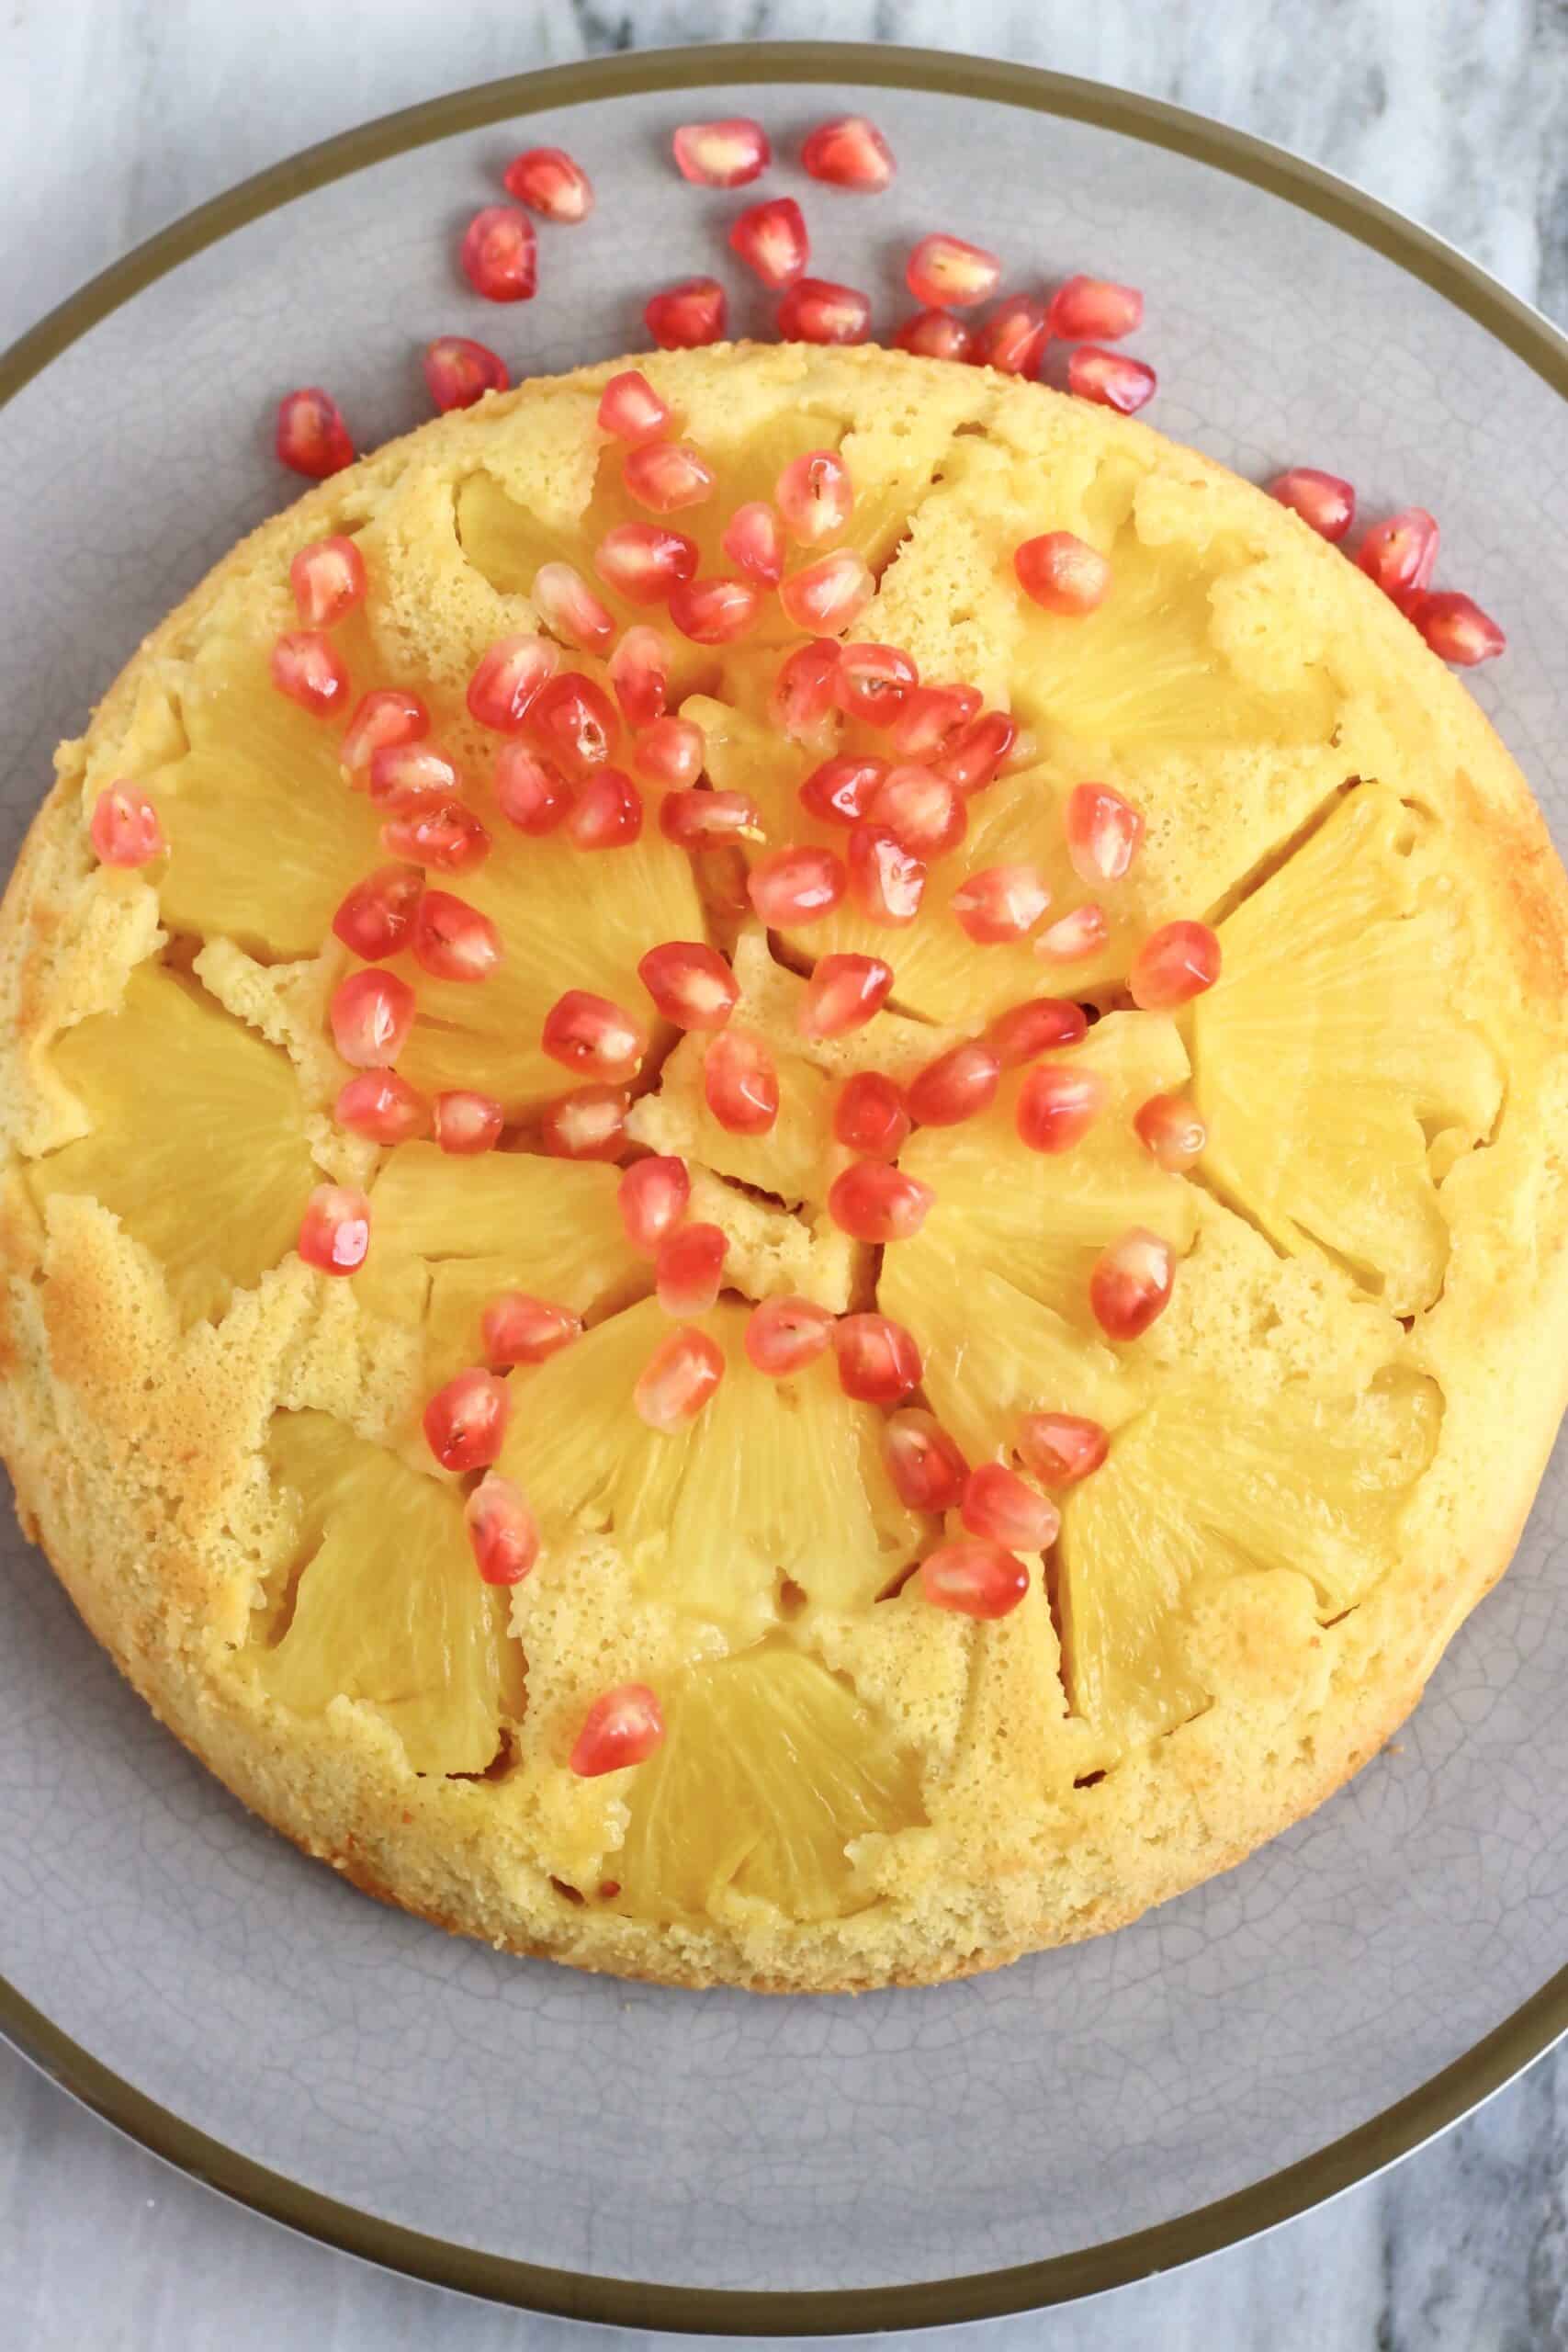 Gluten-free vegan pineapple upside down cake on a plate